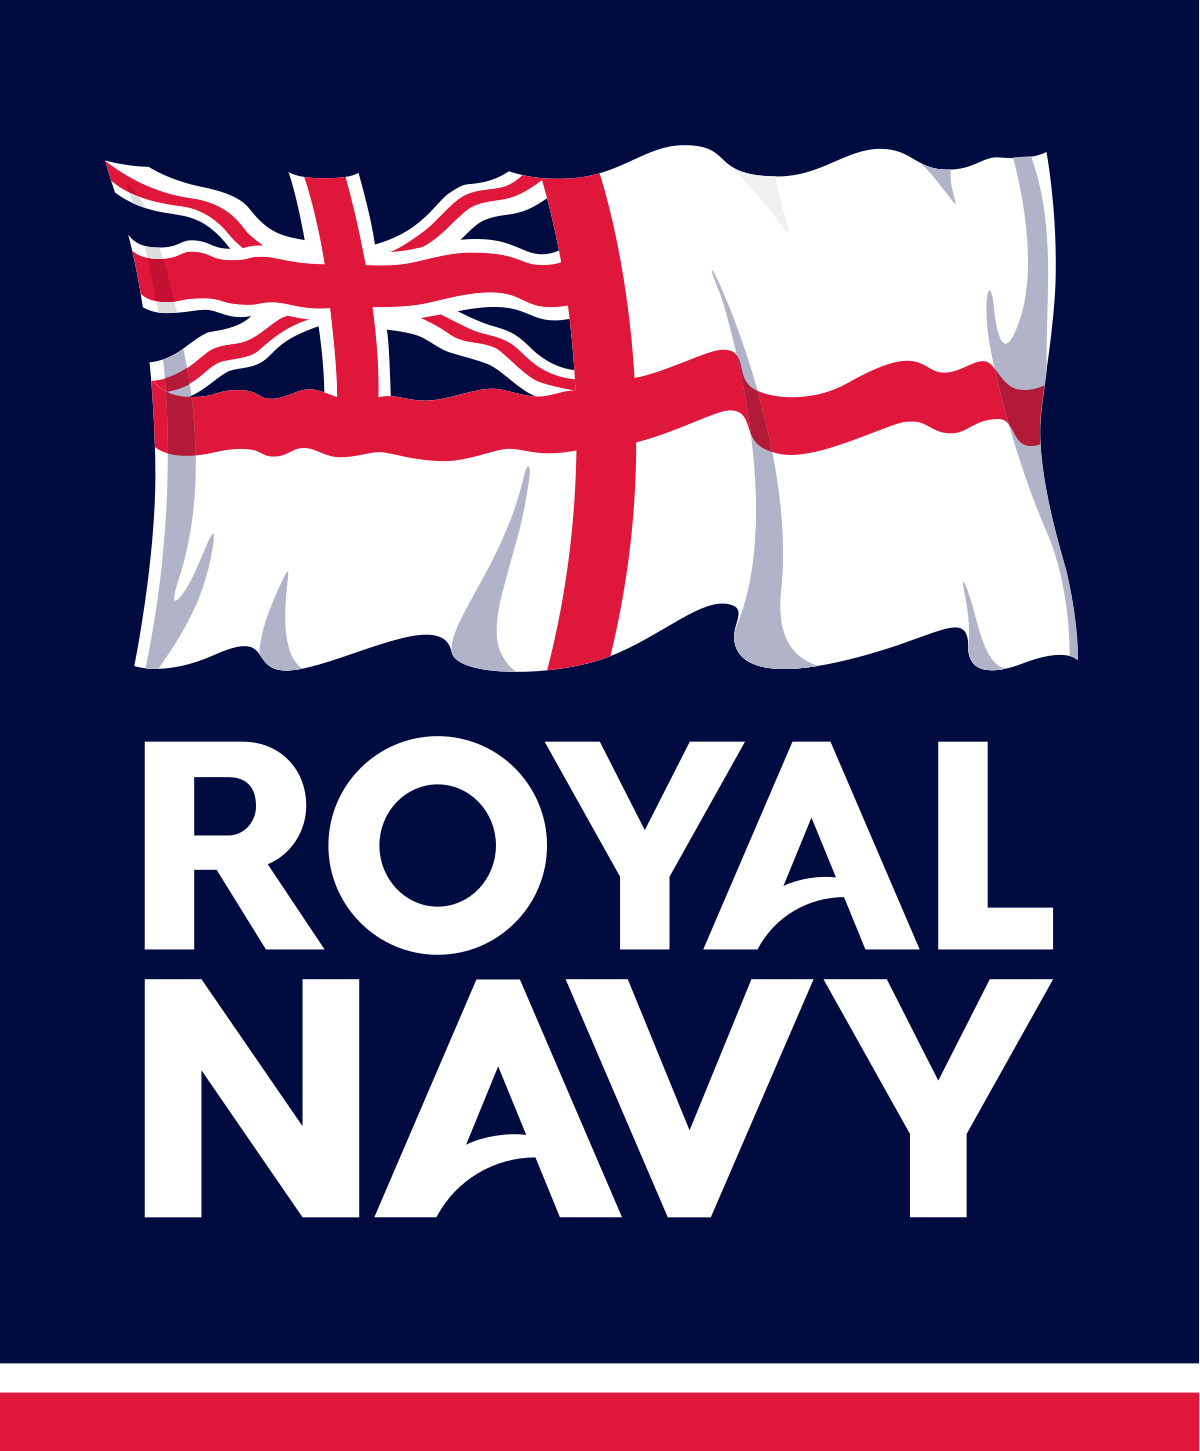 Royal Navy Wikipedia